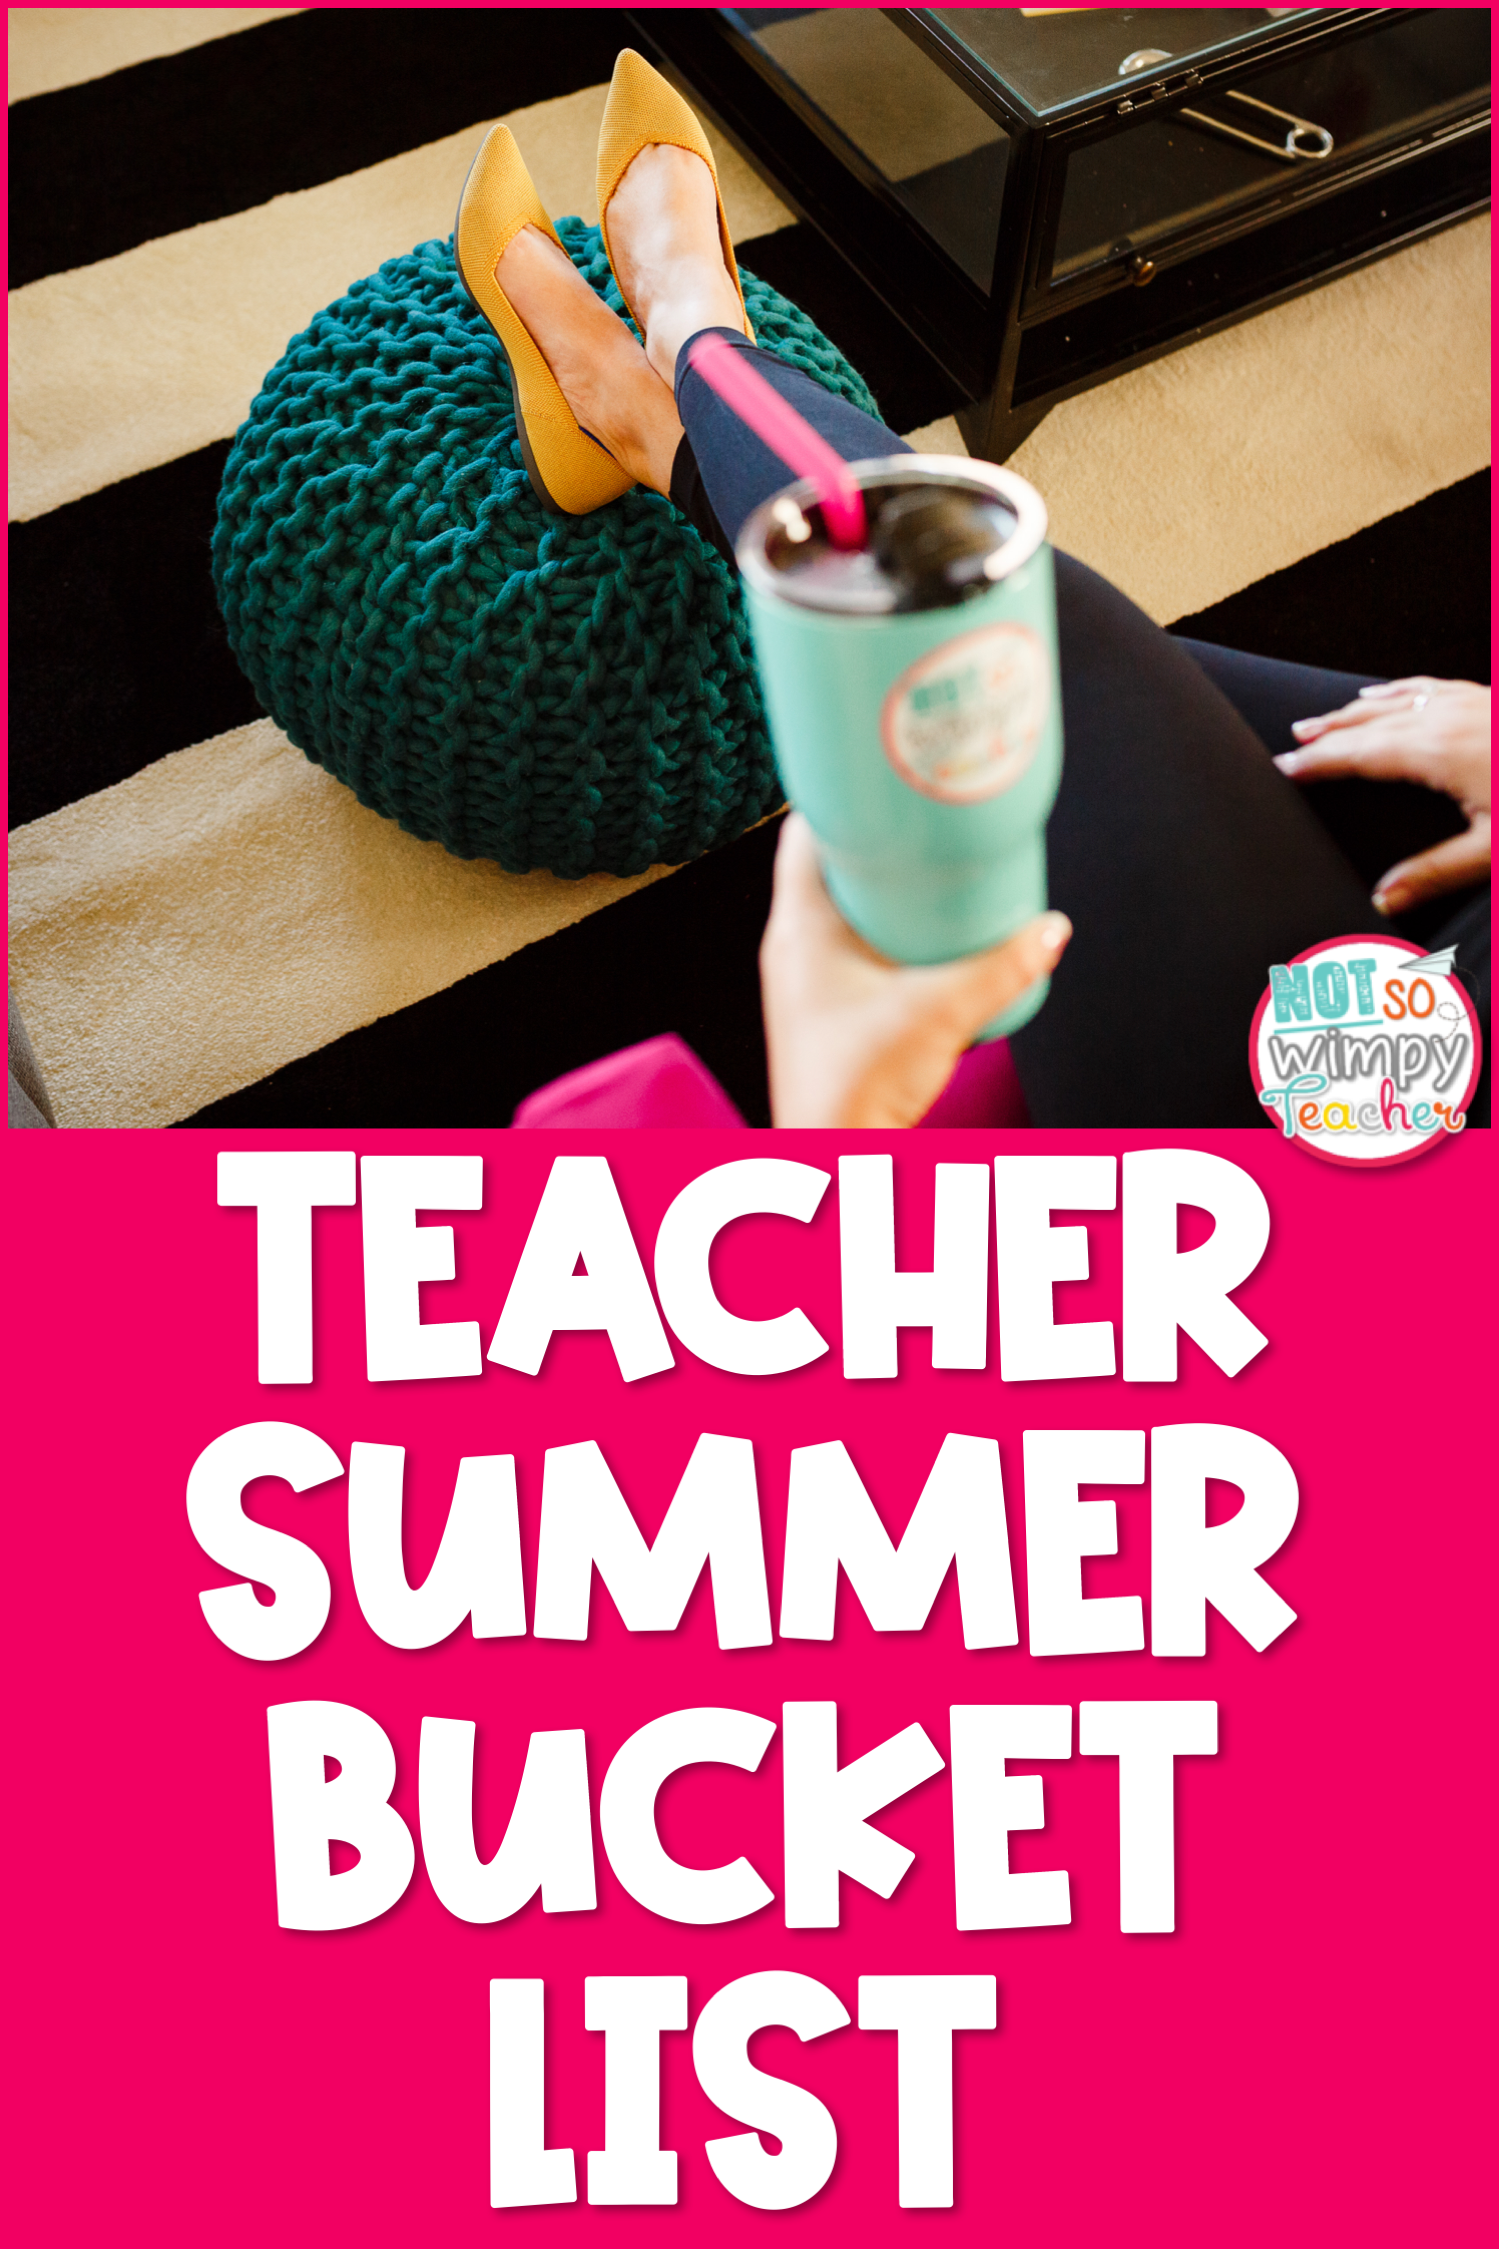 Image says "teacher summer bucket list" and shows Jamie kicking her feet up.